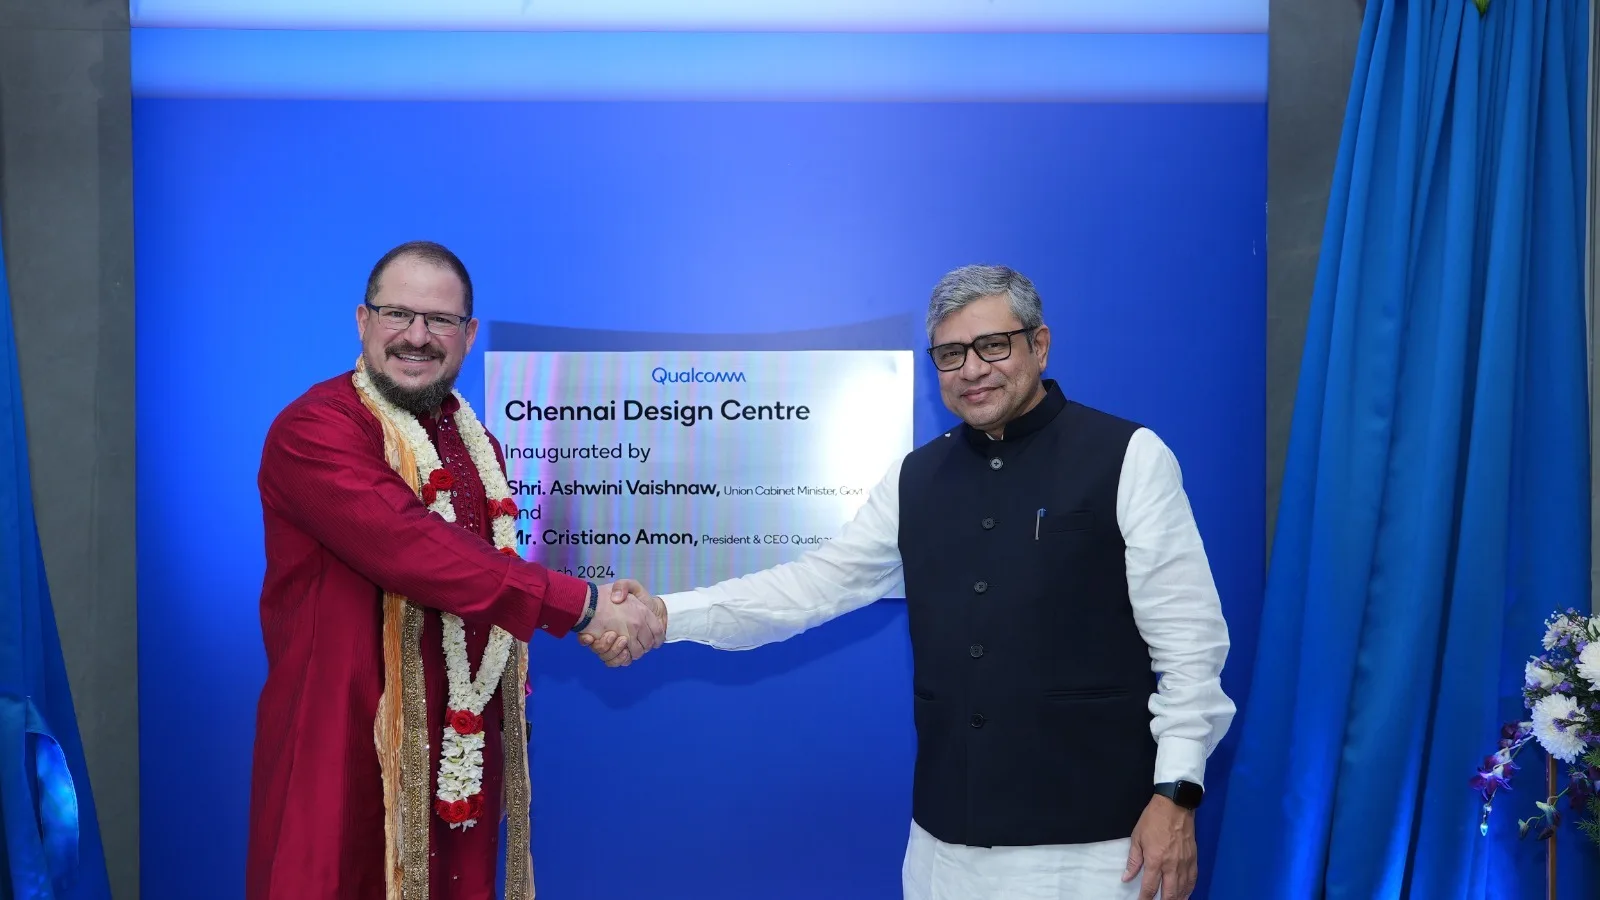 Design Center inaugurated in Chennai